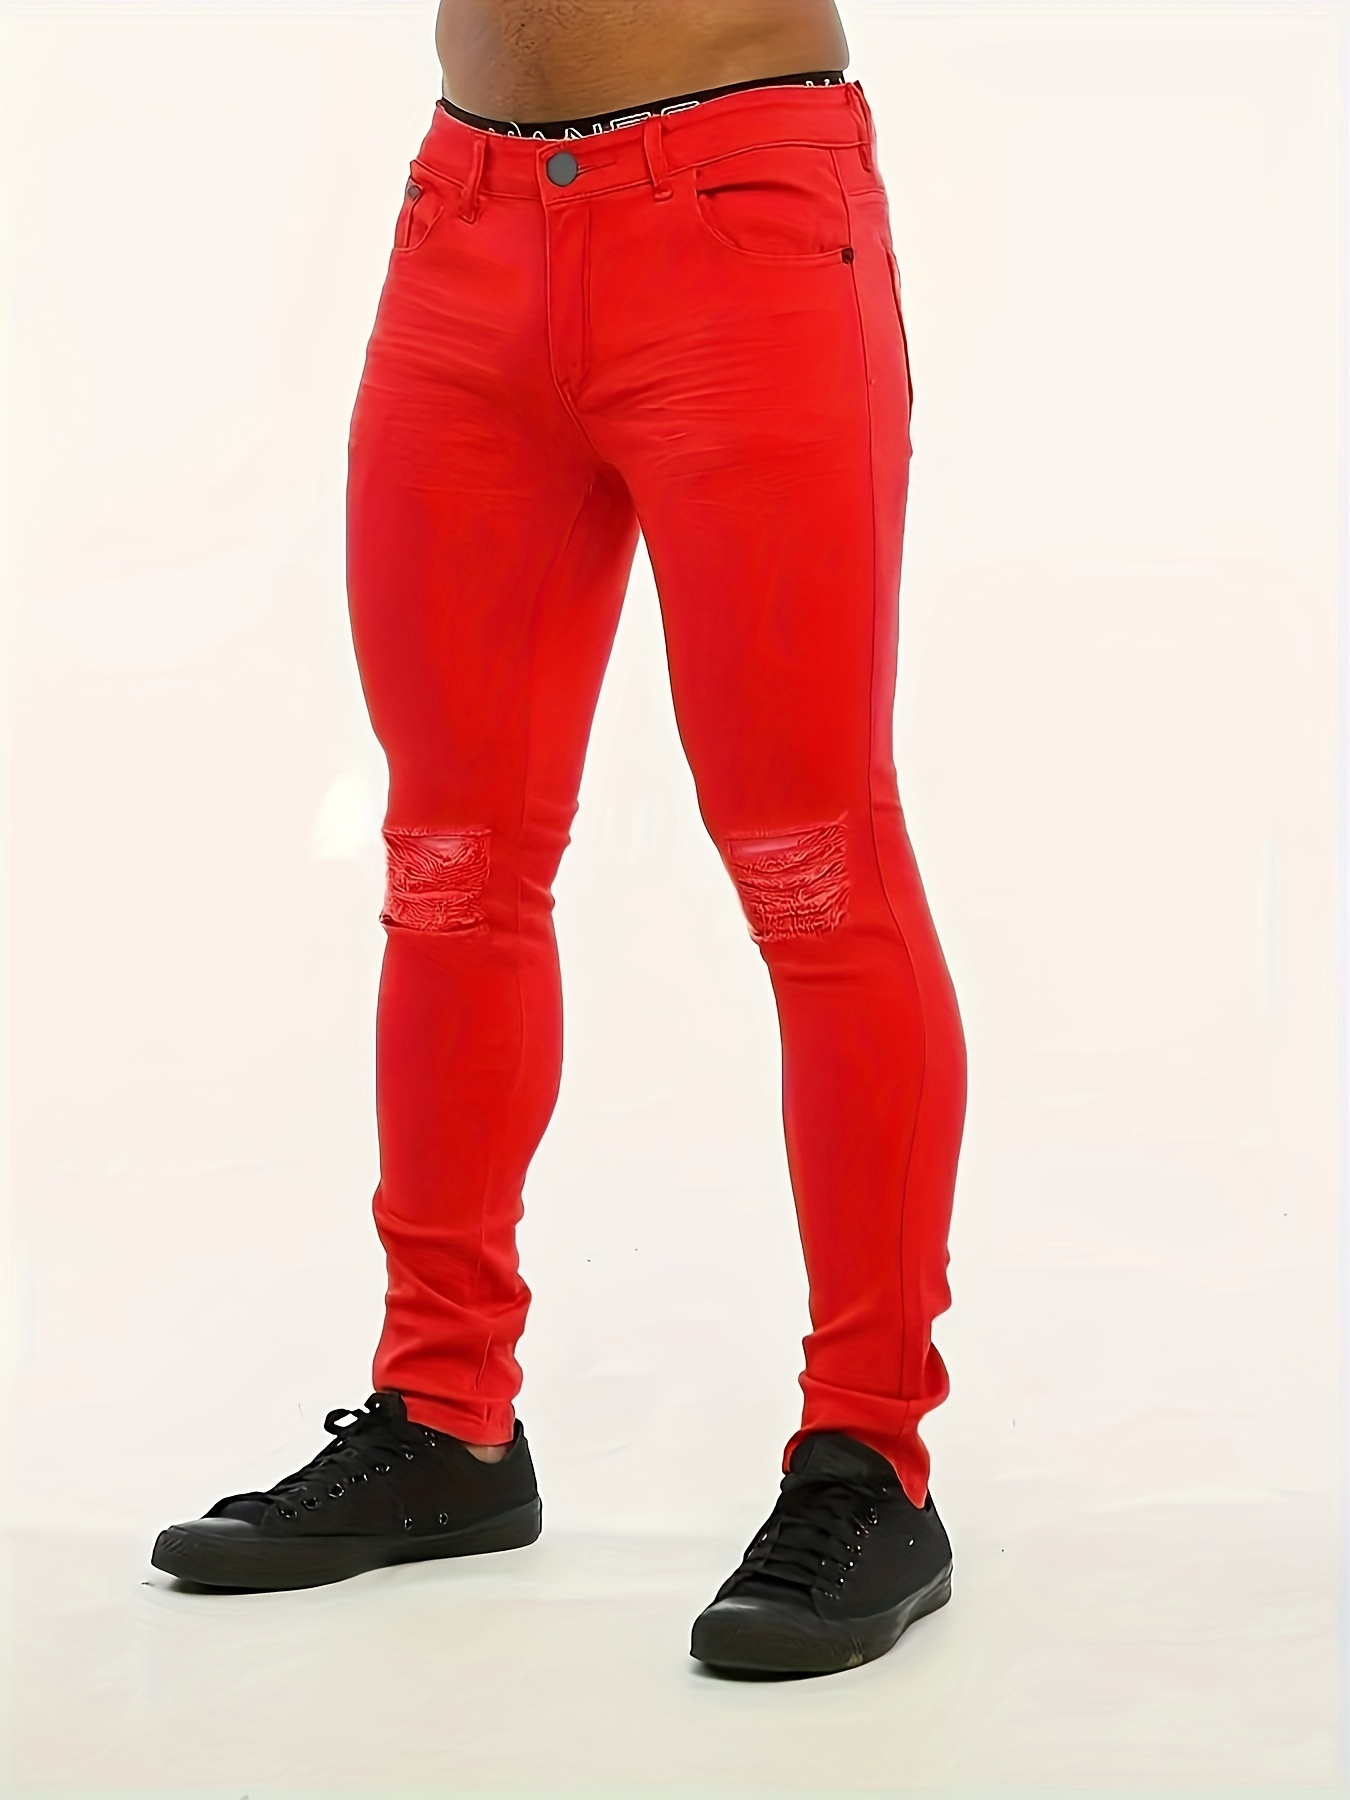  Pantalones vaqueros para hombre, pantalones rojos